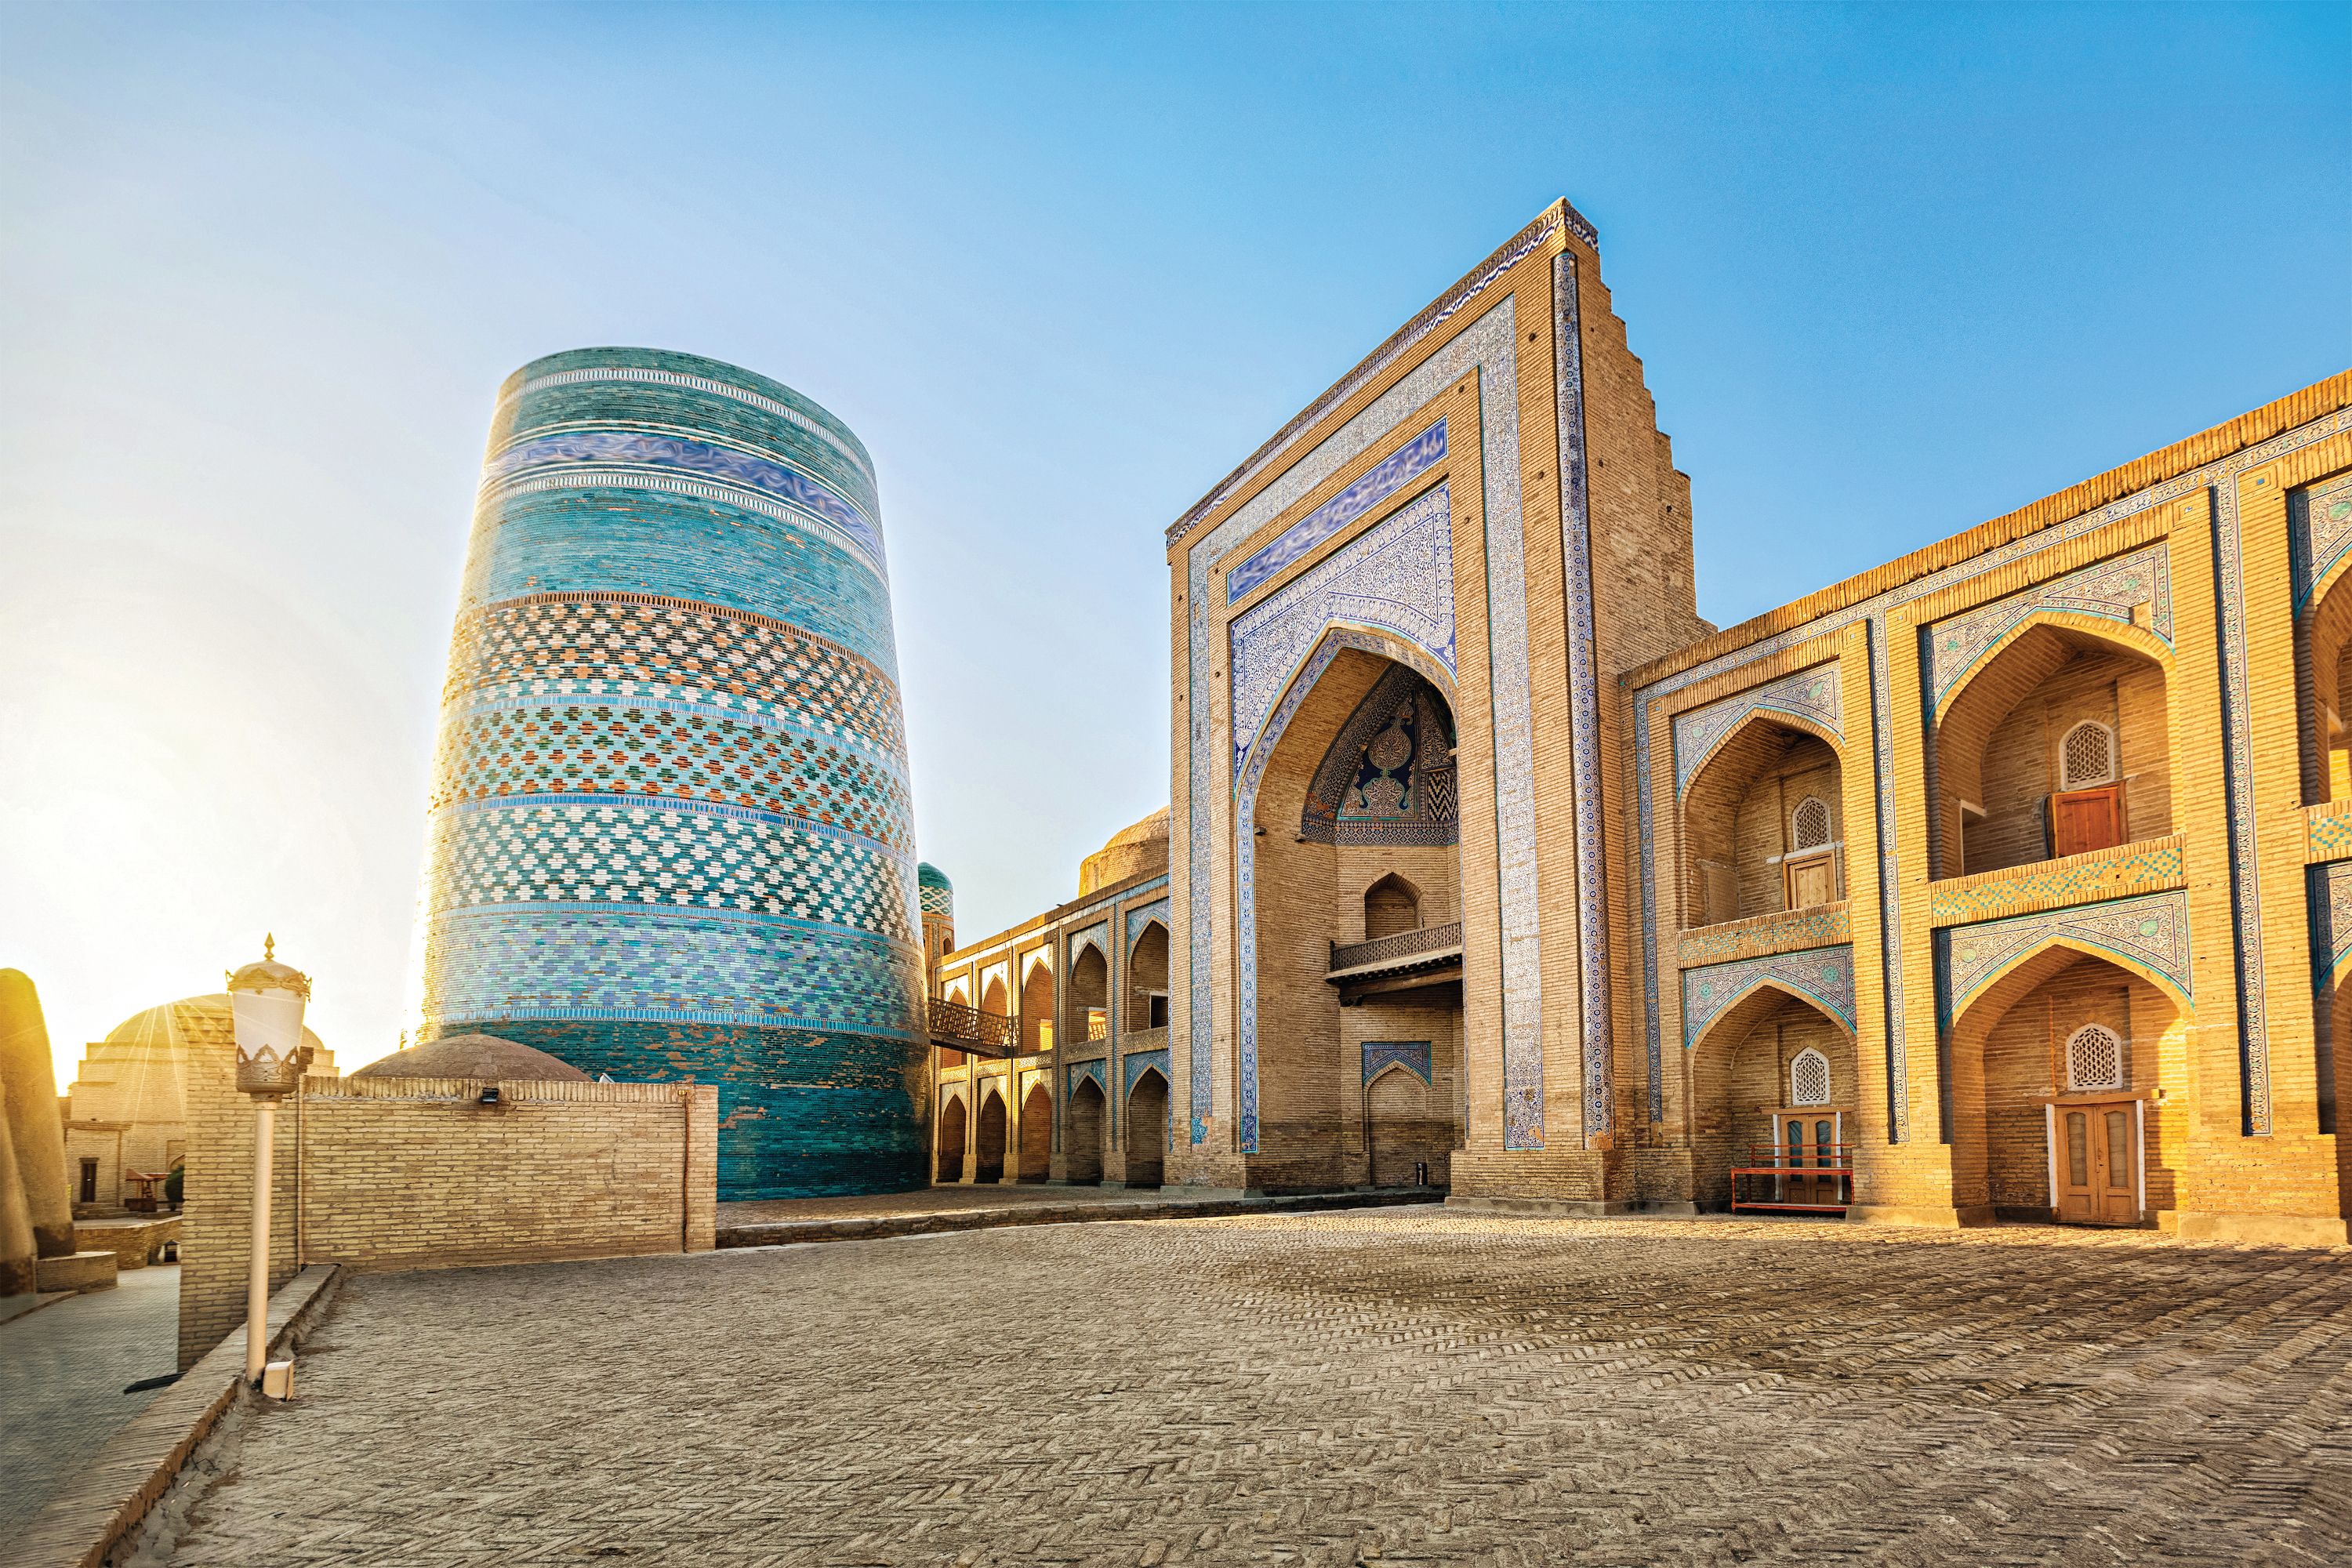 Uzbekistan - Sites & Cities along the Silk Road